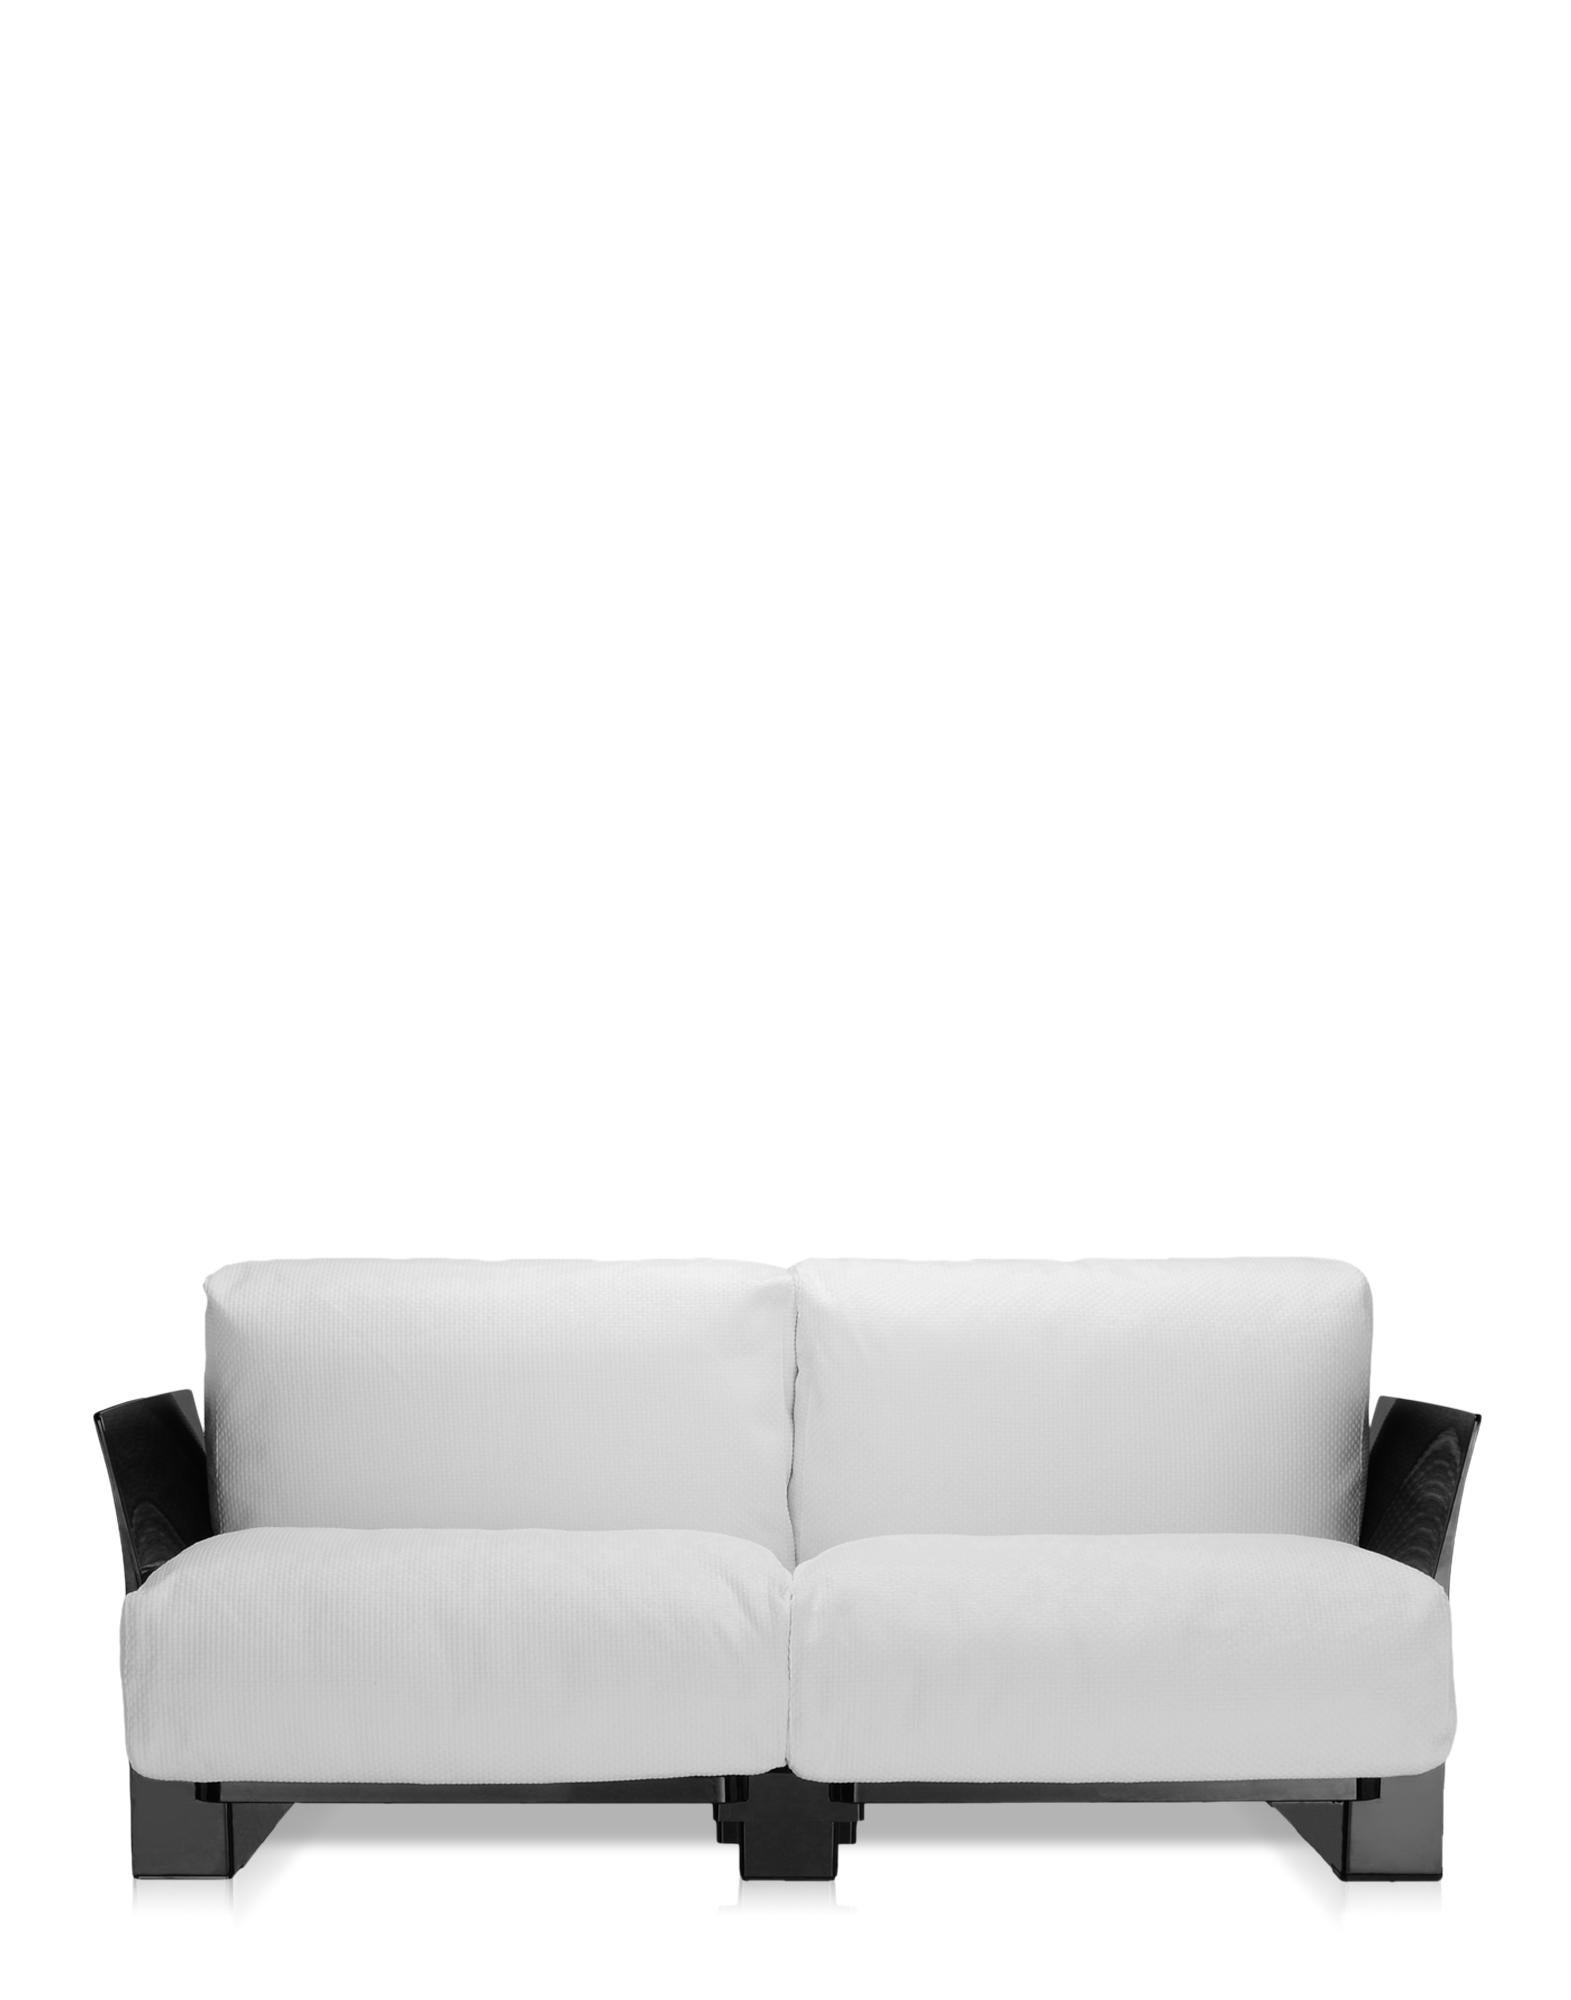 Modern Kartell Pop Outdoor Sofa in Ikon White by Piero Lissoni For Sale